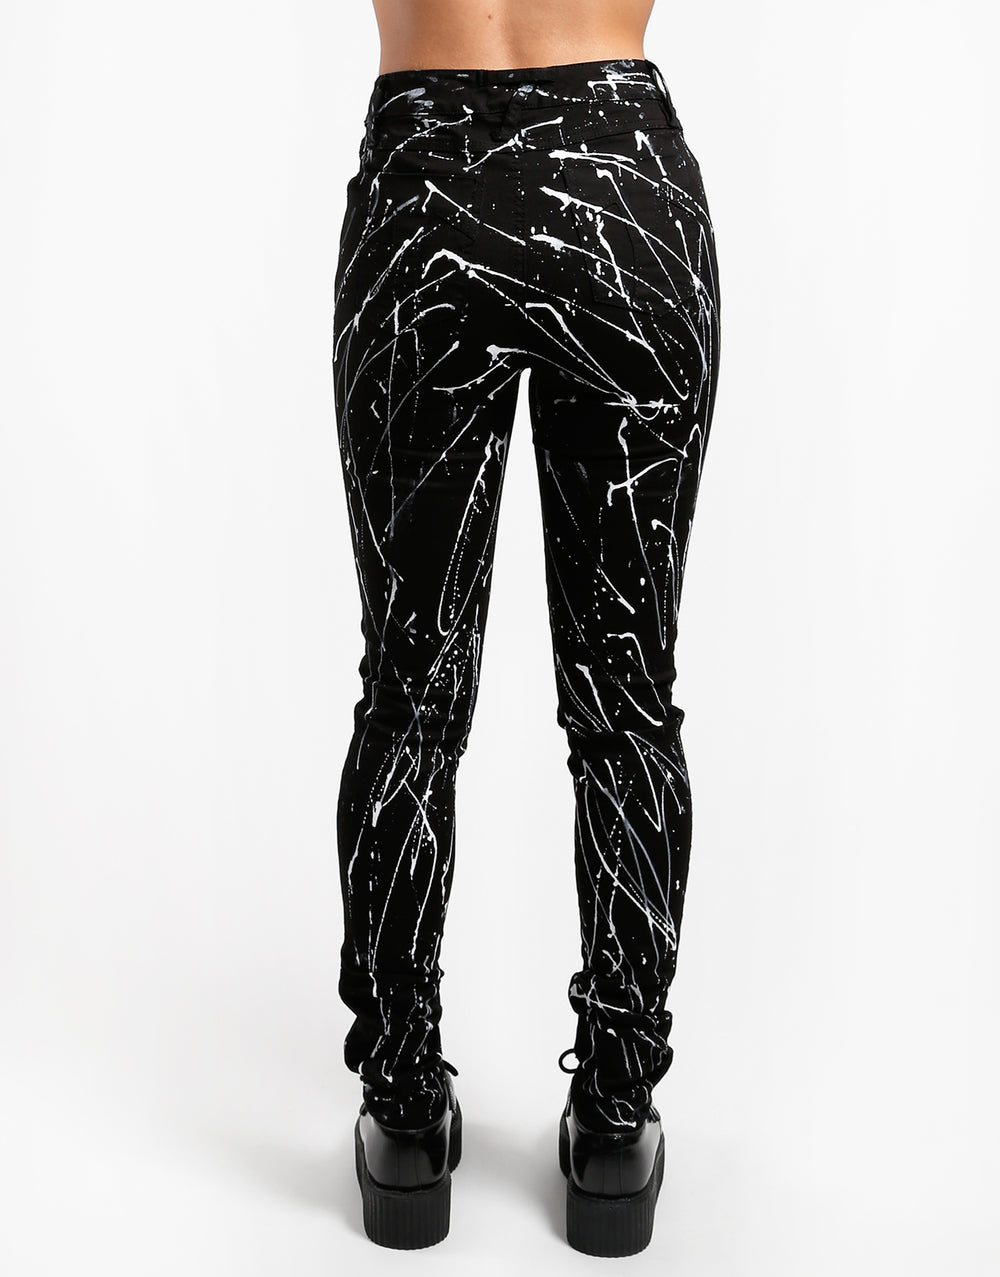 Black and White Splatter Paint Leggings by Trinity Jean DESIGNS